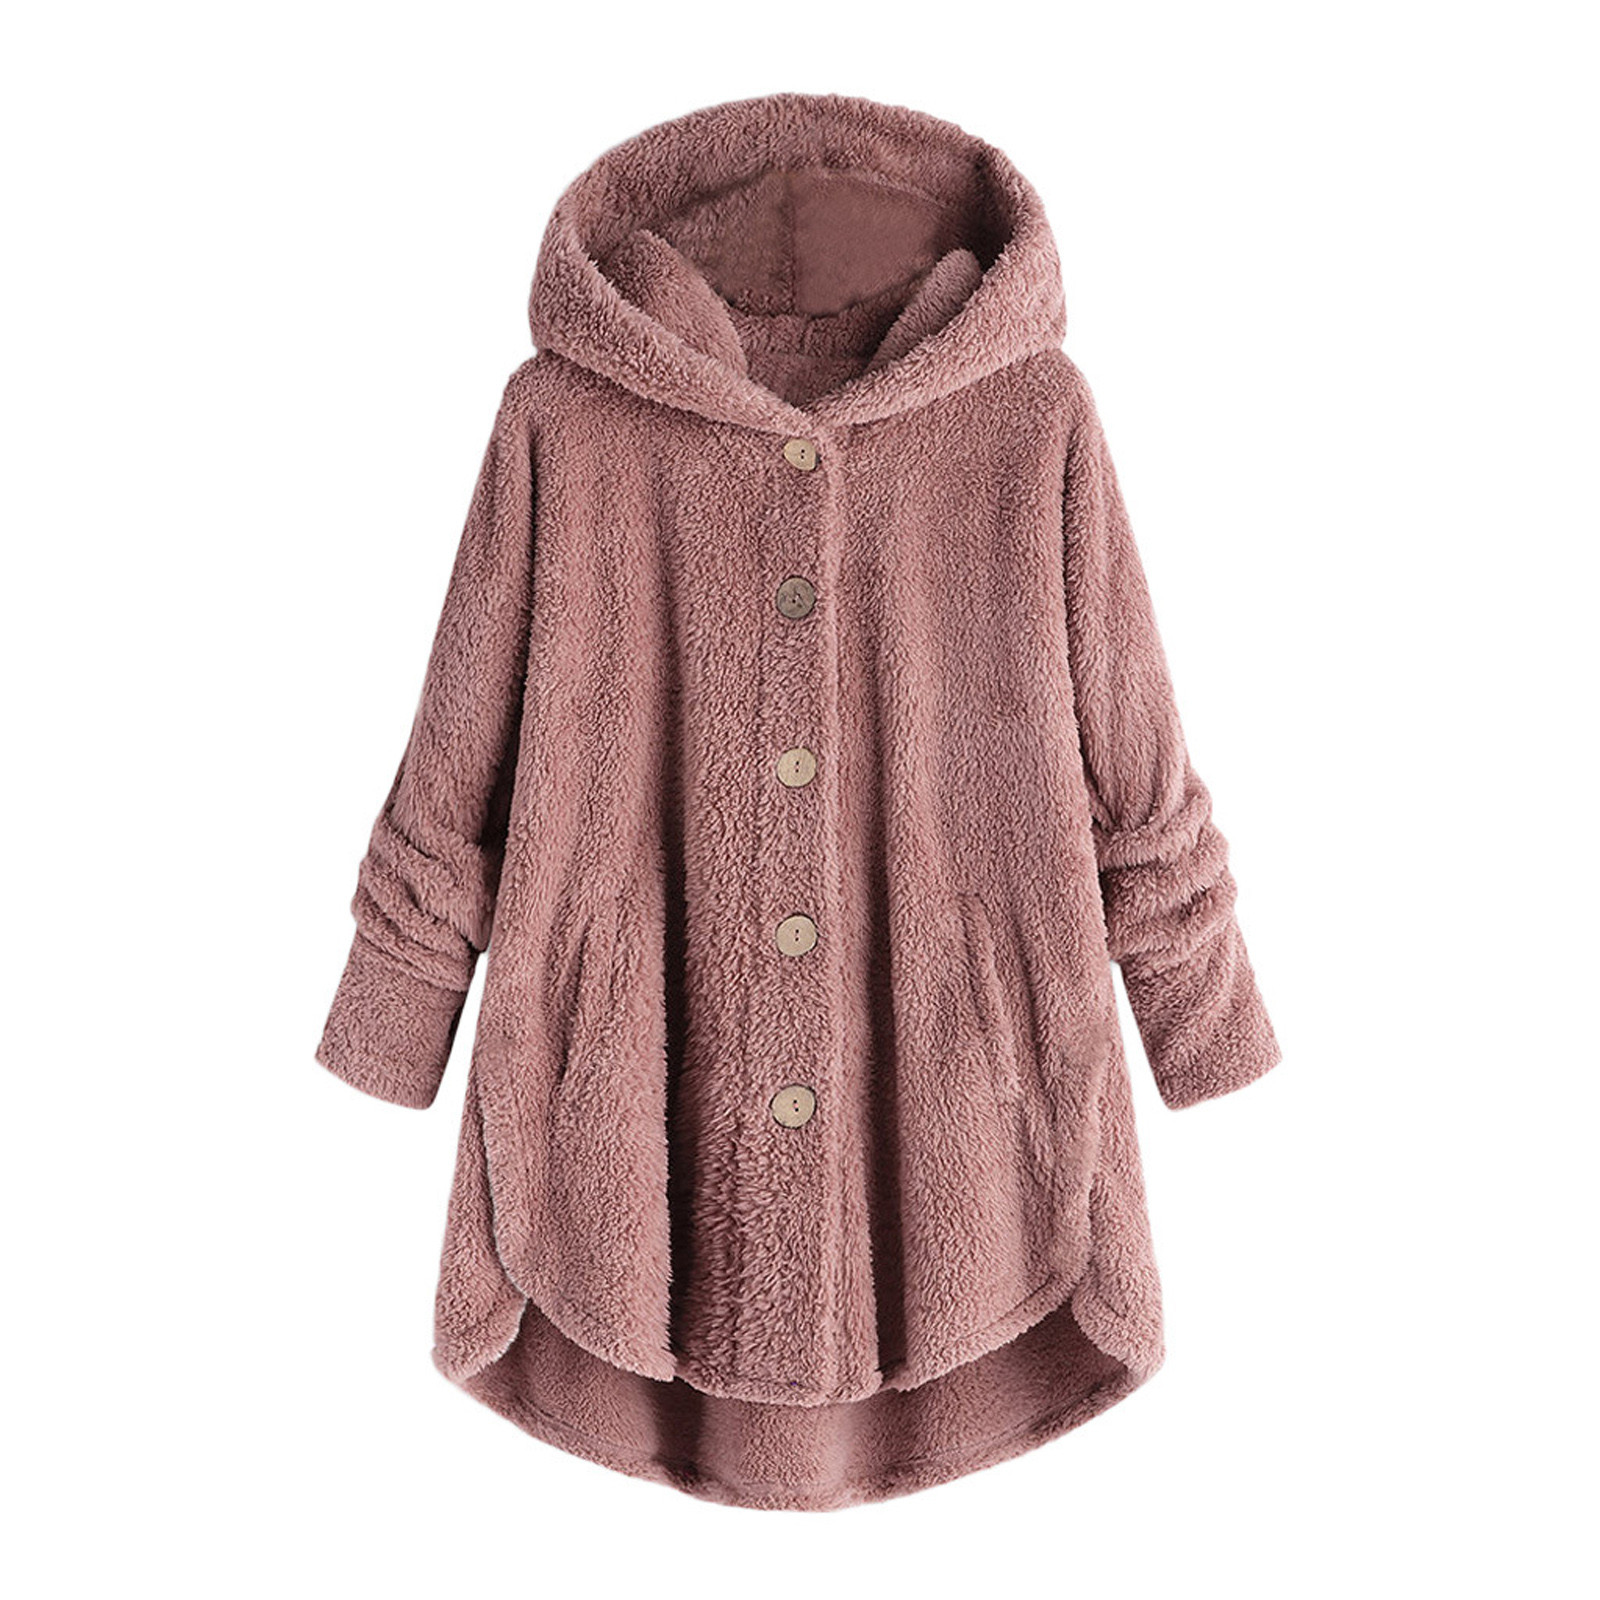 Mnycxen Women Plus Size Button Plush Tops Hooded Loose Cardigan Wool Coat Winter Jacket - image 4 of 5